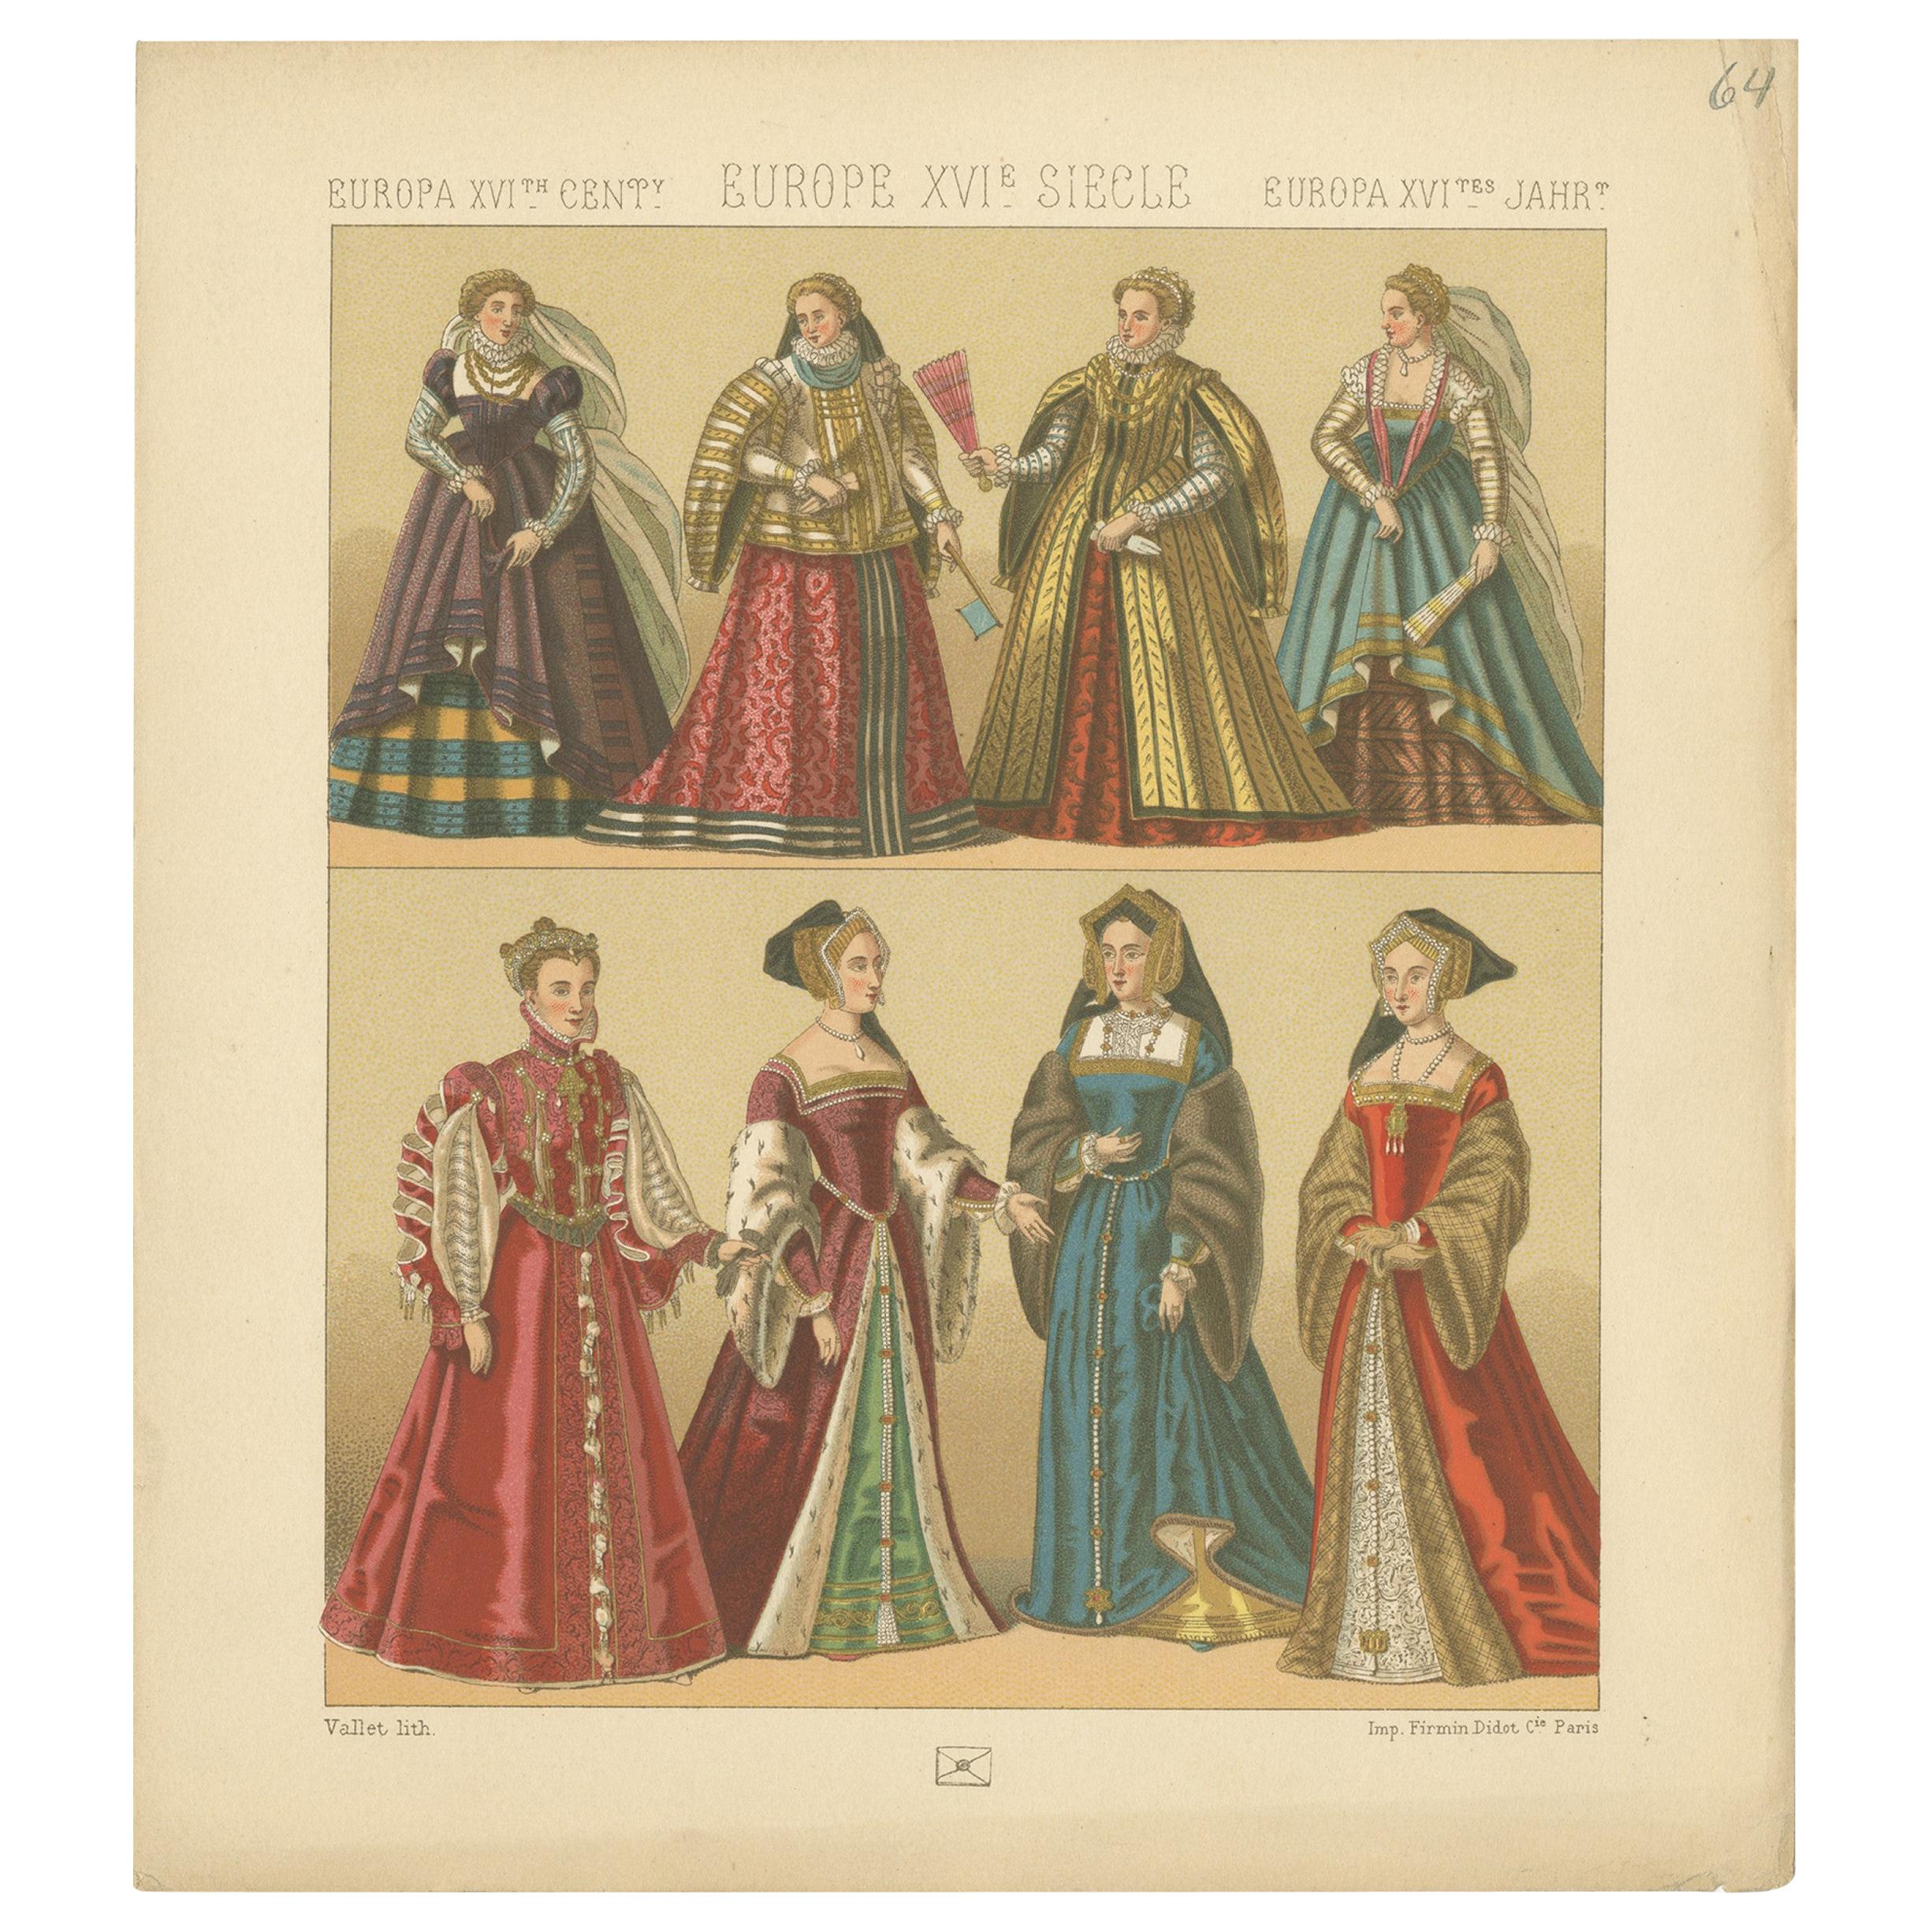 Pl. 64 Antique Print of European XVIth Century Costumes by Racinet, circa 1880